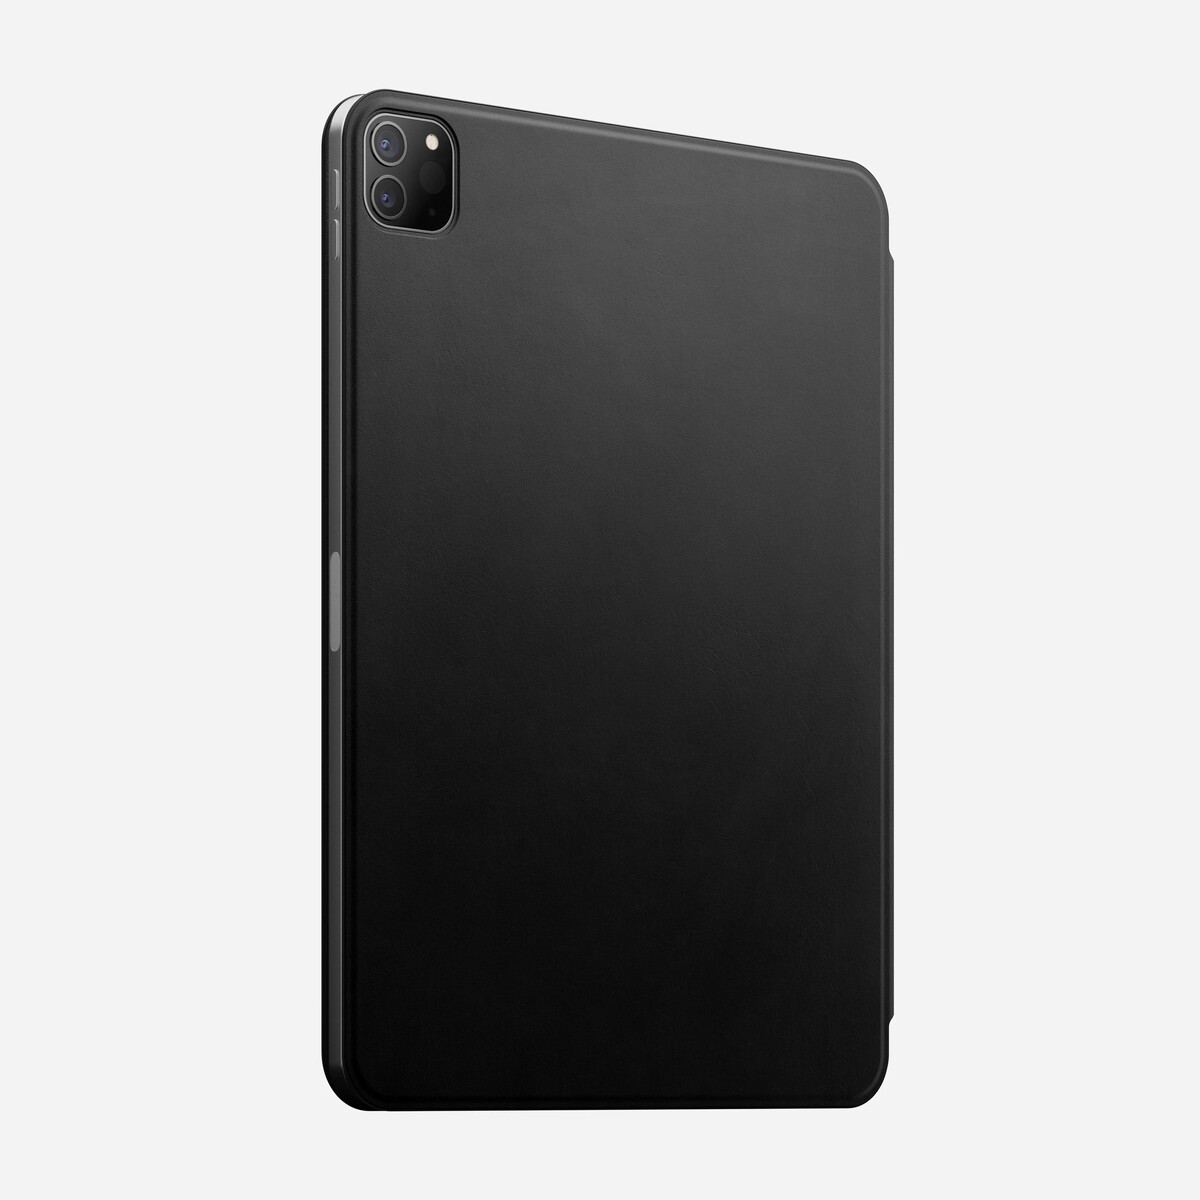 Nomad Leather Folio (Plus): Elegant leather cases for iPad Pro and 